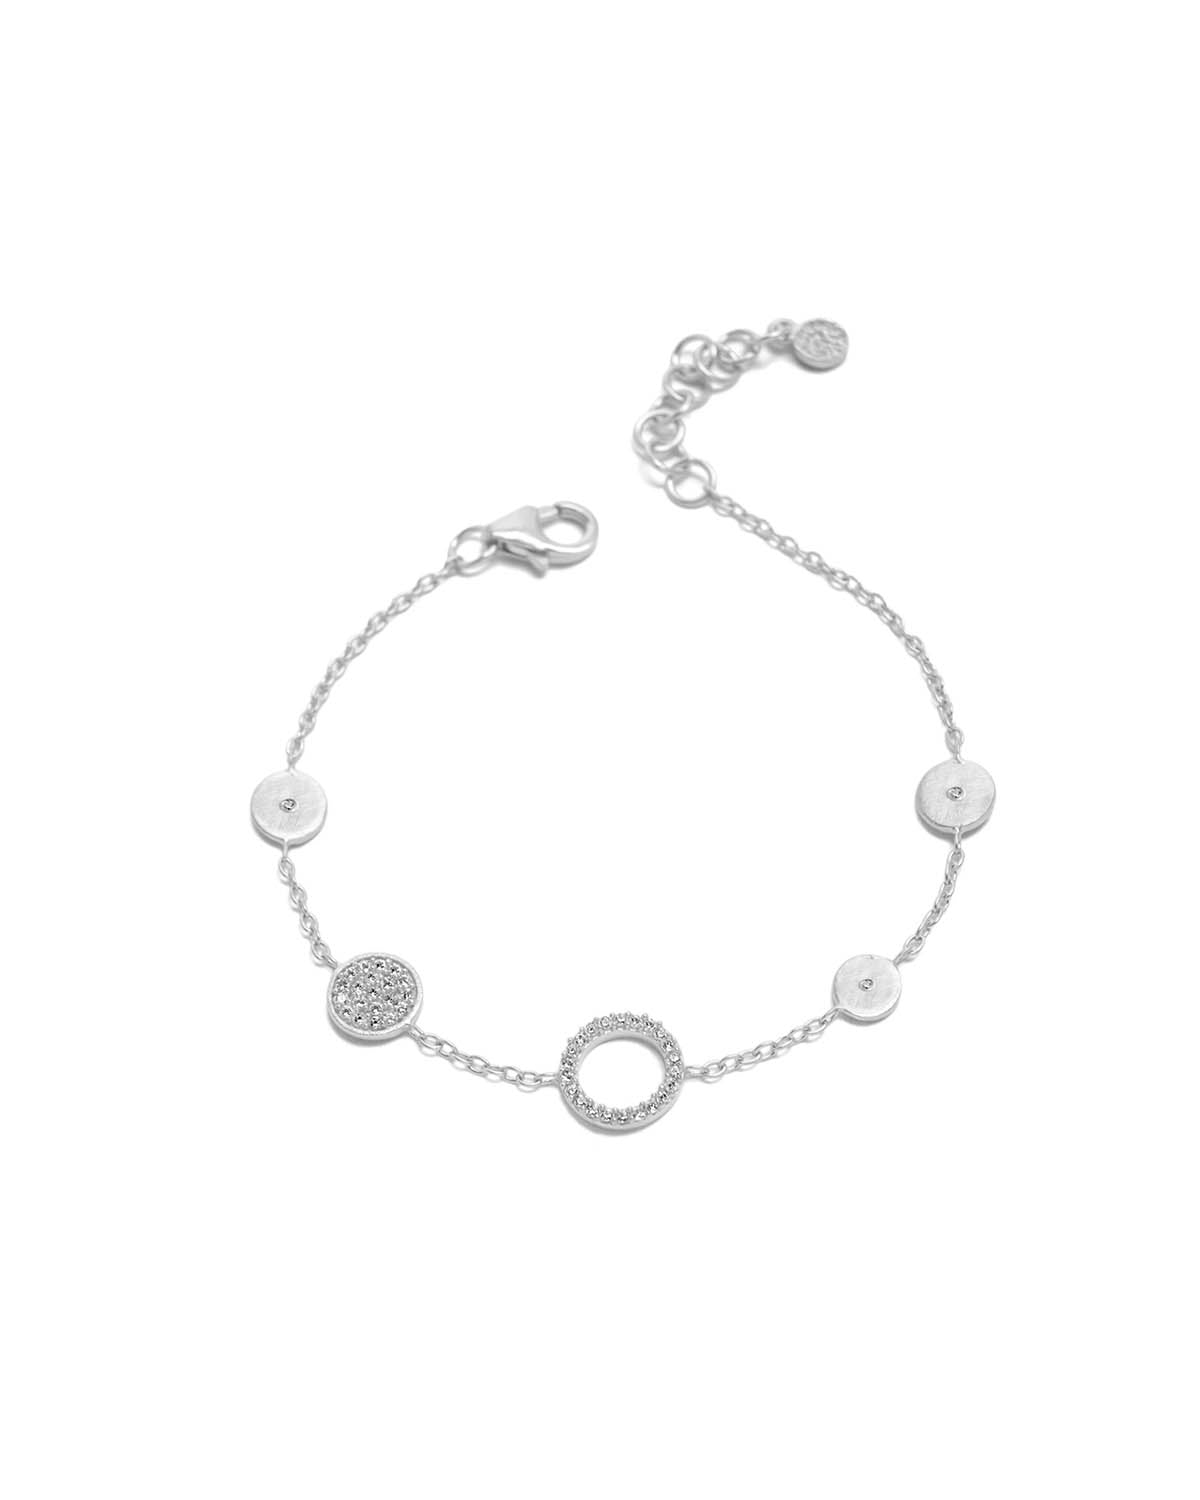 Glimmering Crystals Silver Delicate Bracelet - Moon London